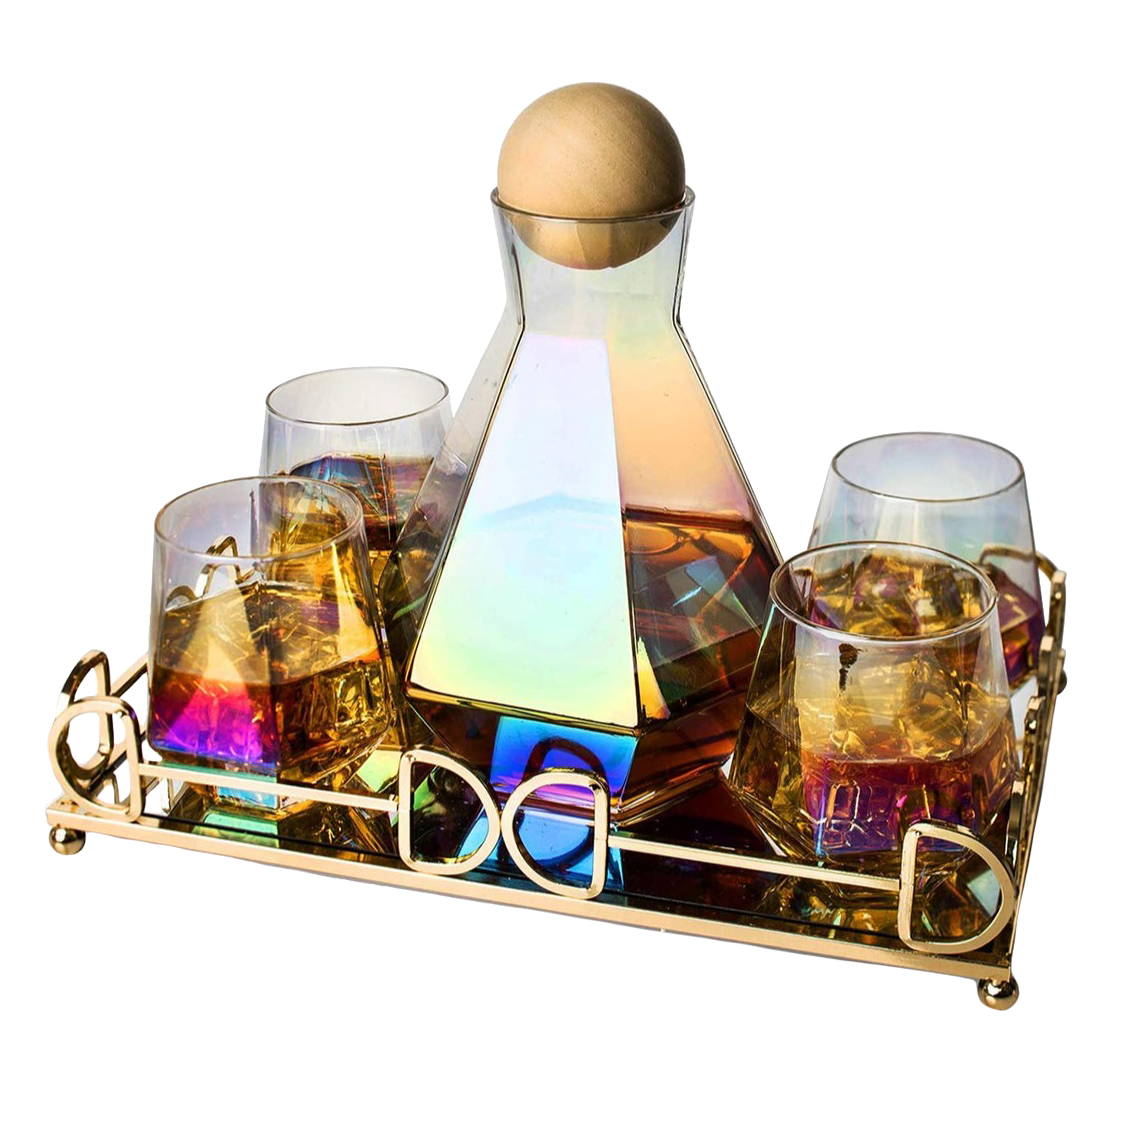 Crofton glass carafe 1 liter w/ lid & box wine carafe pitcher decanter - In  Box